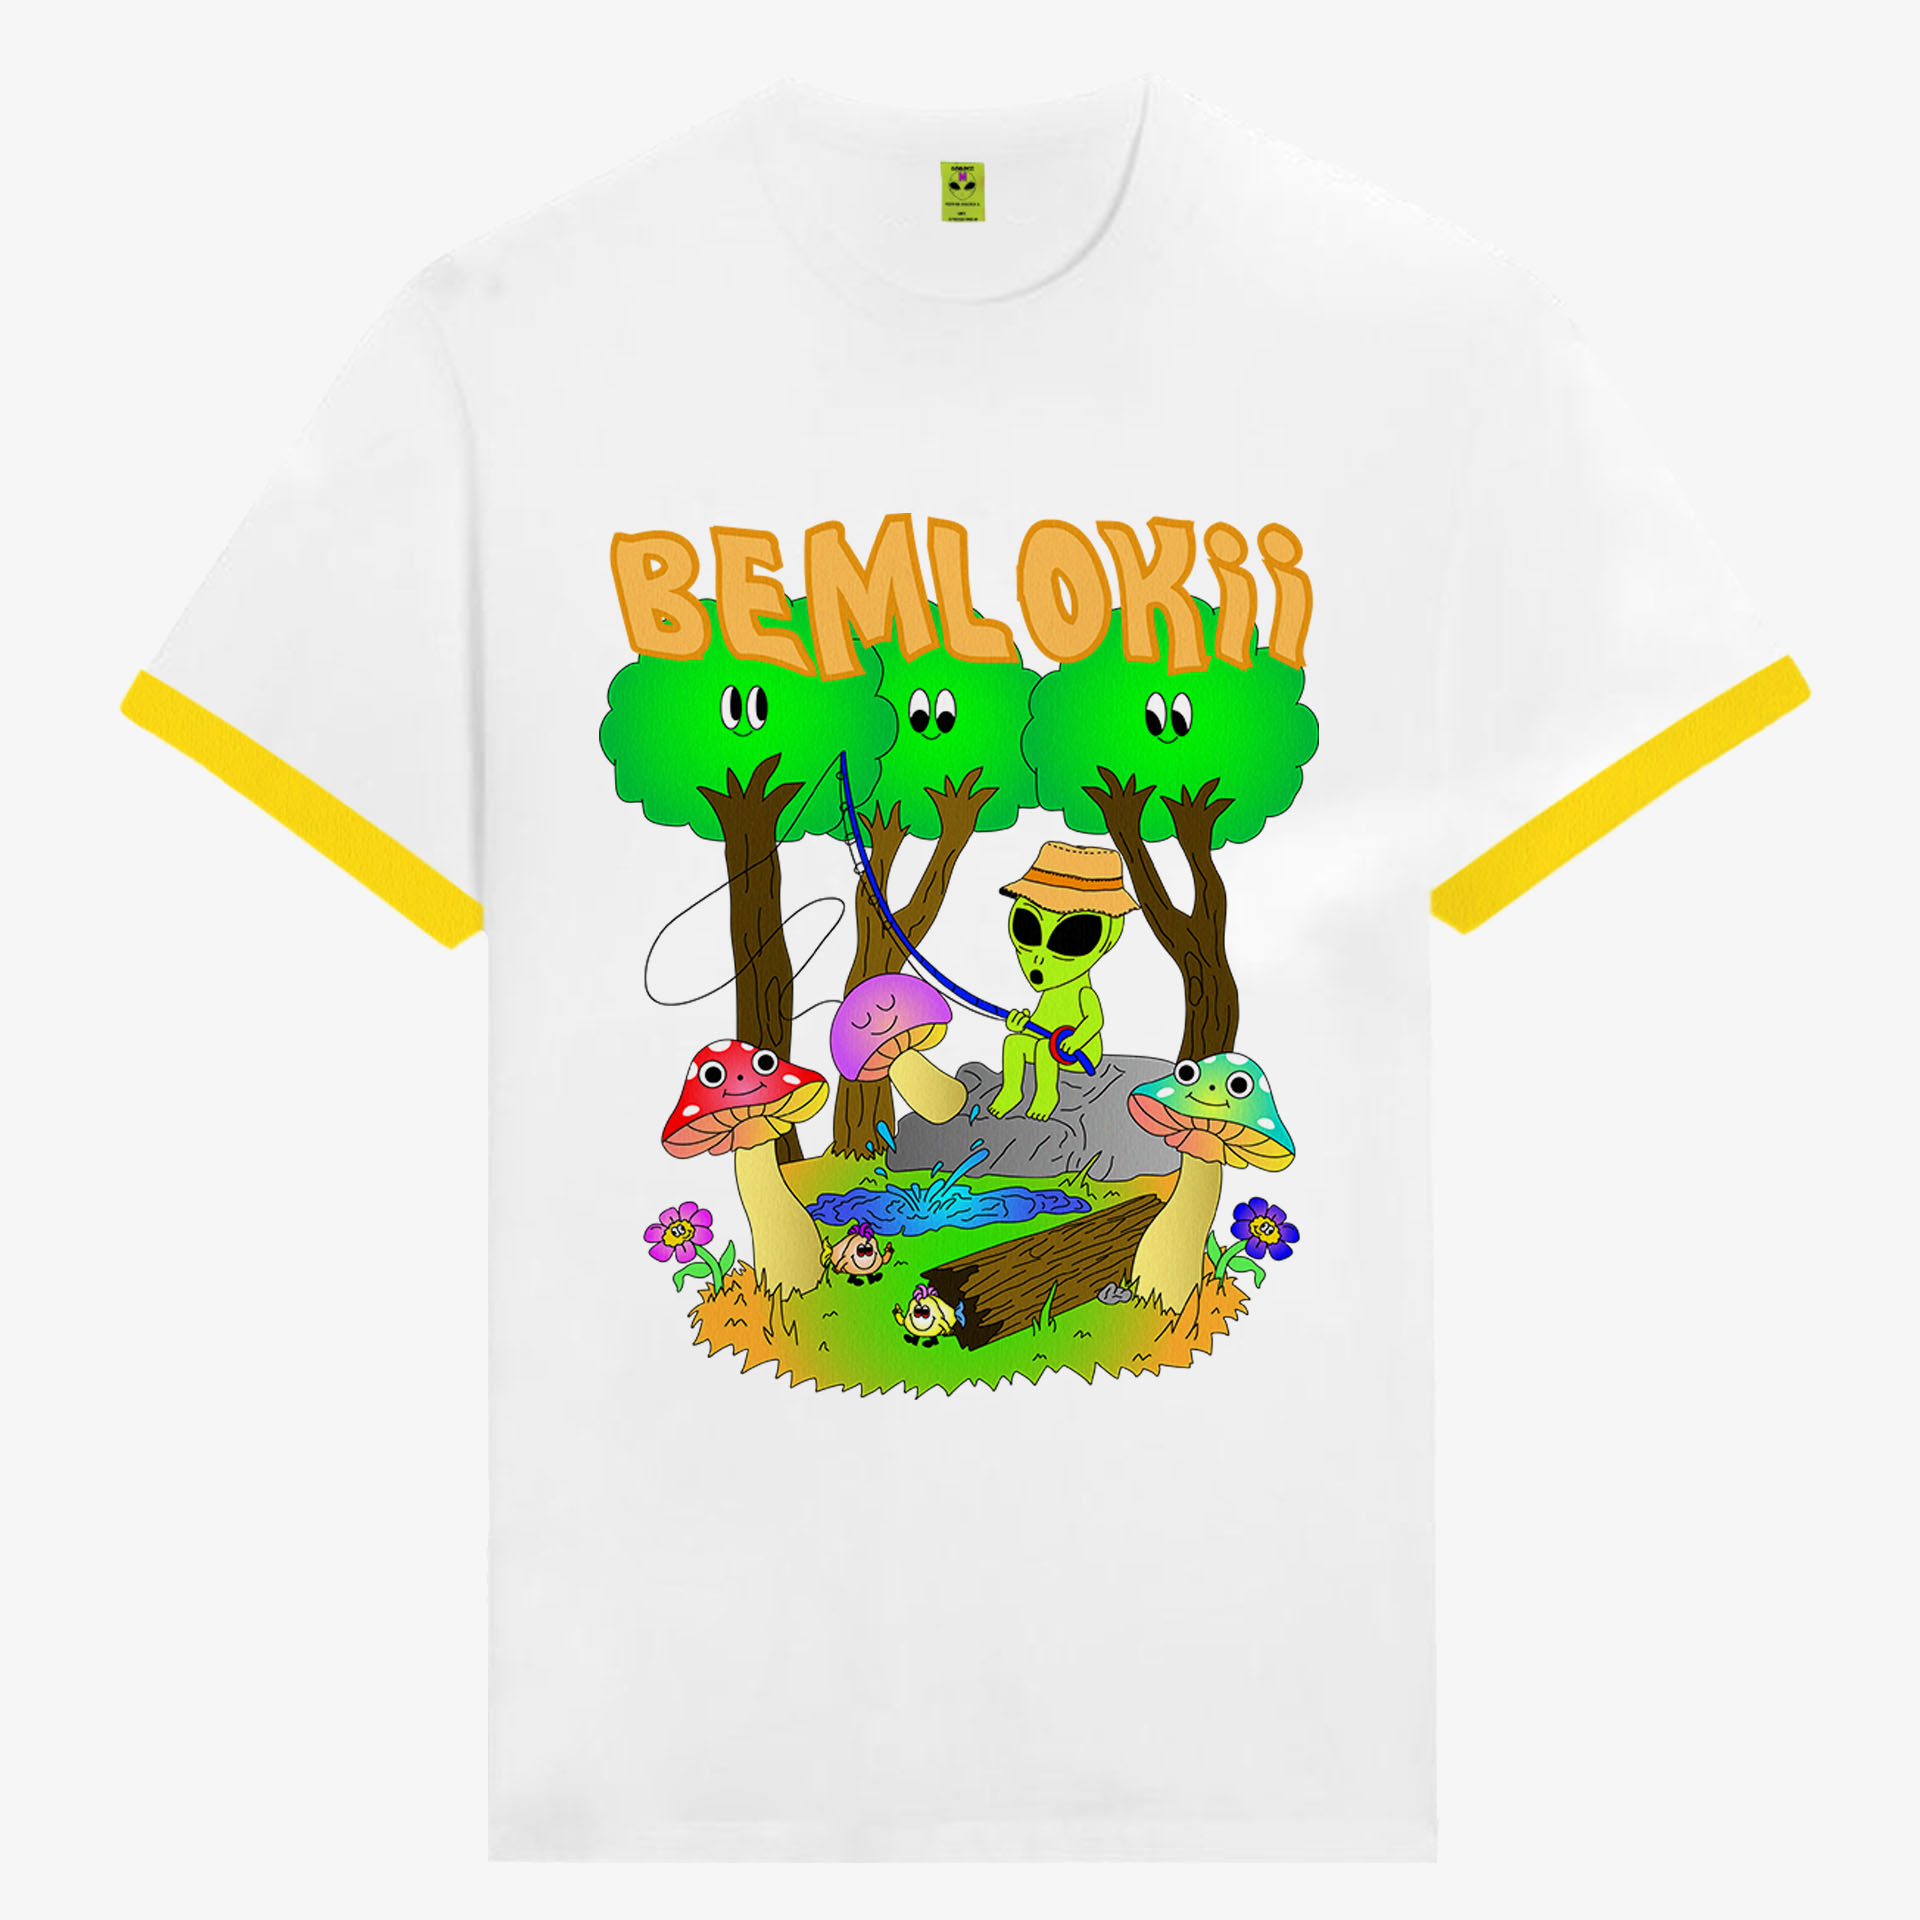 Camiseta Crazy Fishing